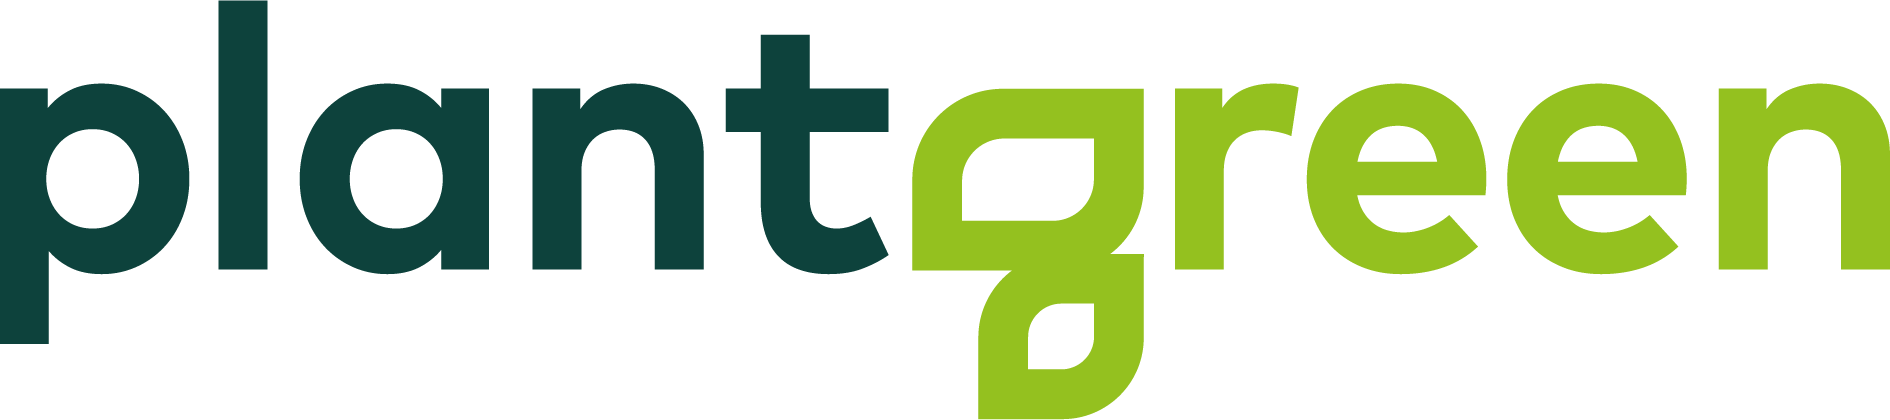 plantgreen_logo_logo_dark